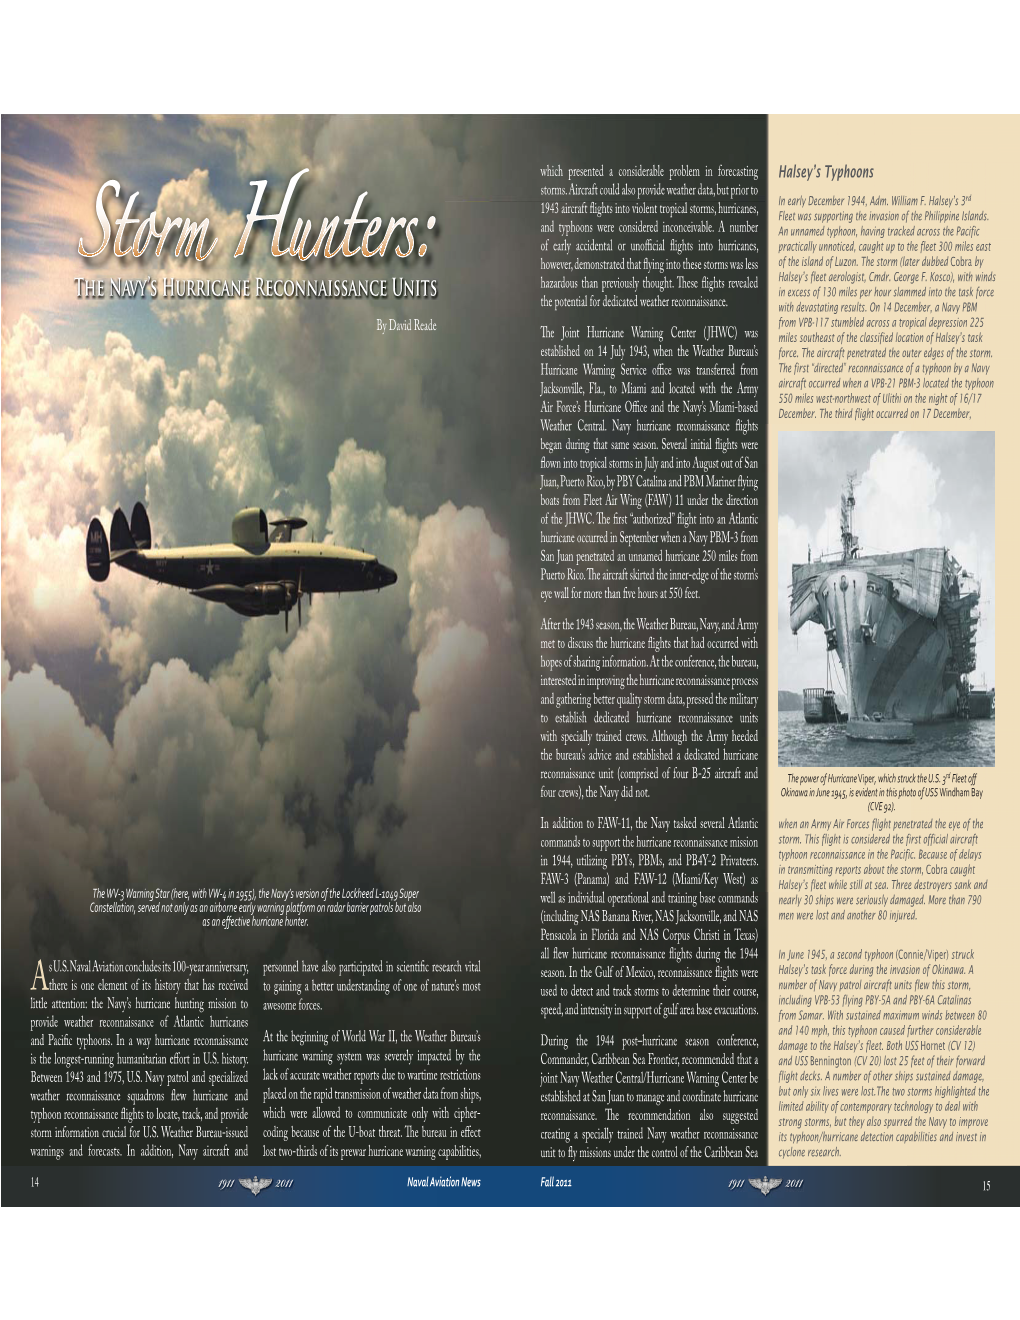 National Aviation News, Fall 2011